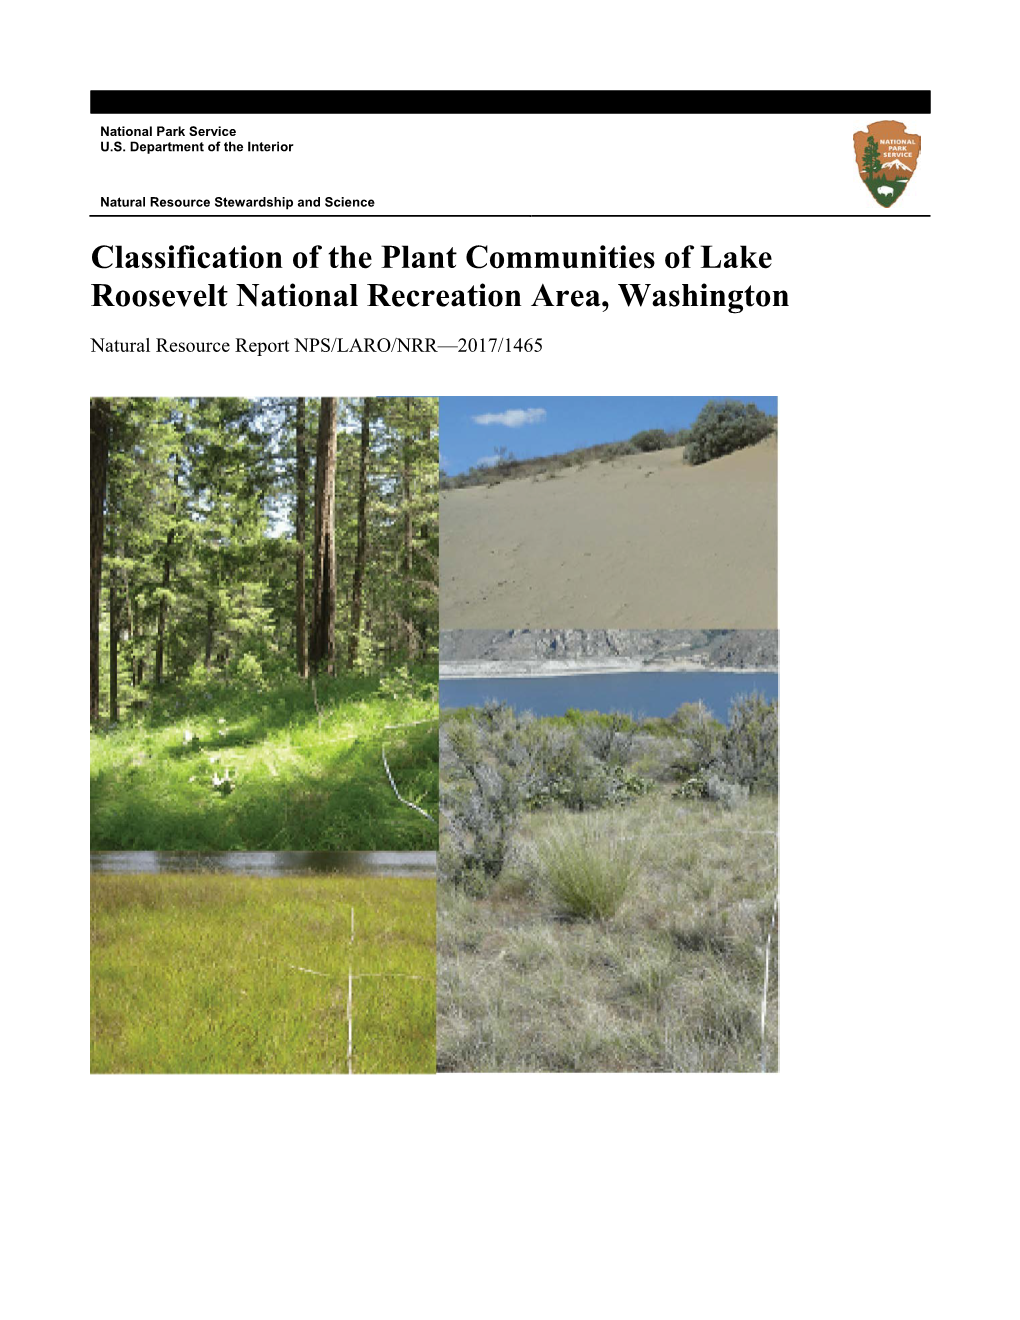 Classification of the Plant Communities of Lake Roosevelt National Recreation Area, Washington